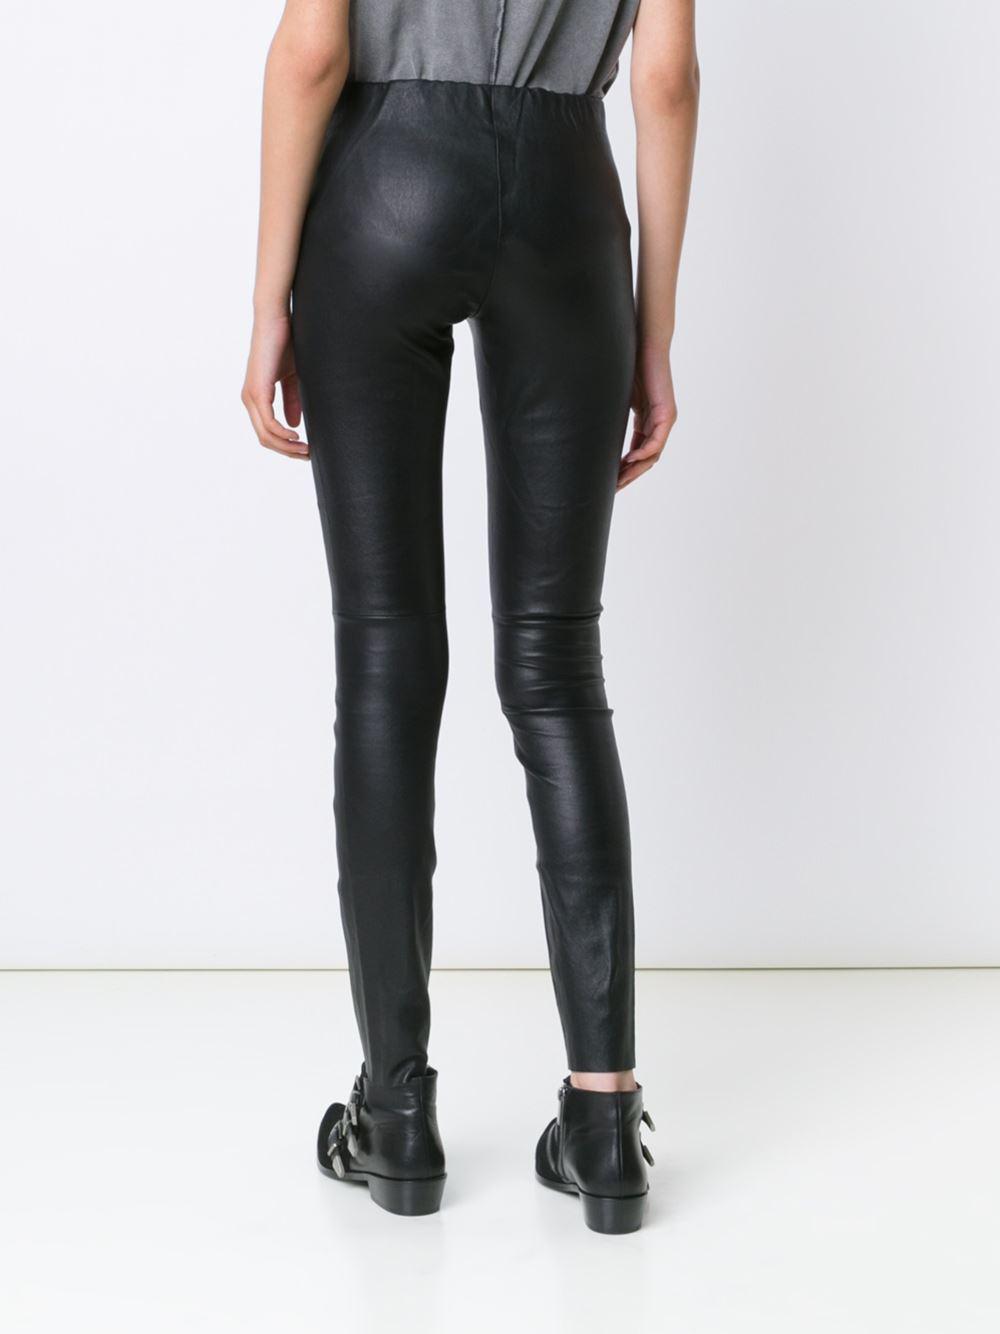 Lyst - Anine Bing Leather Leggings in Black